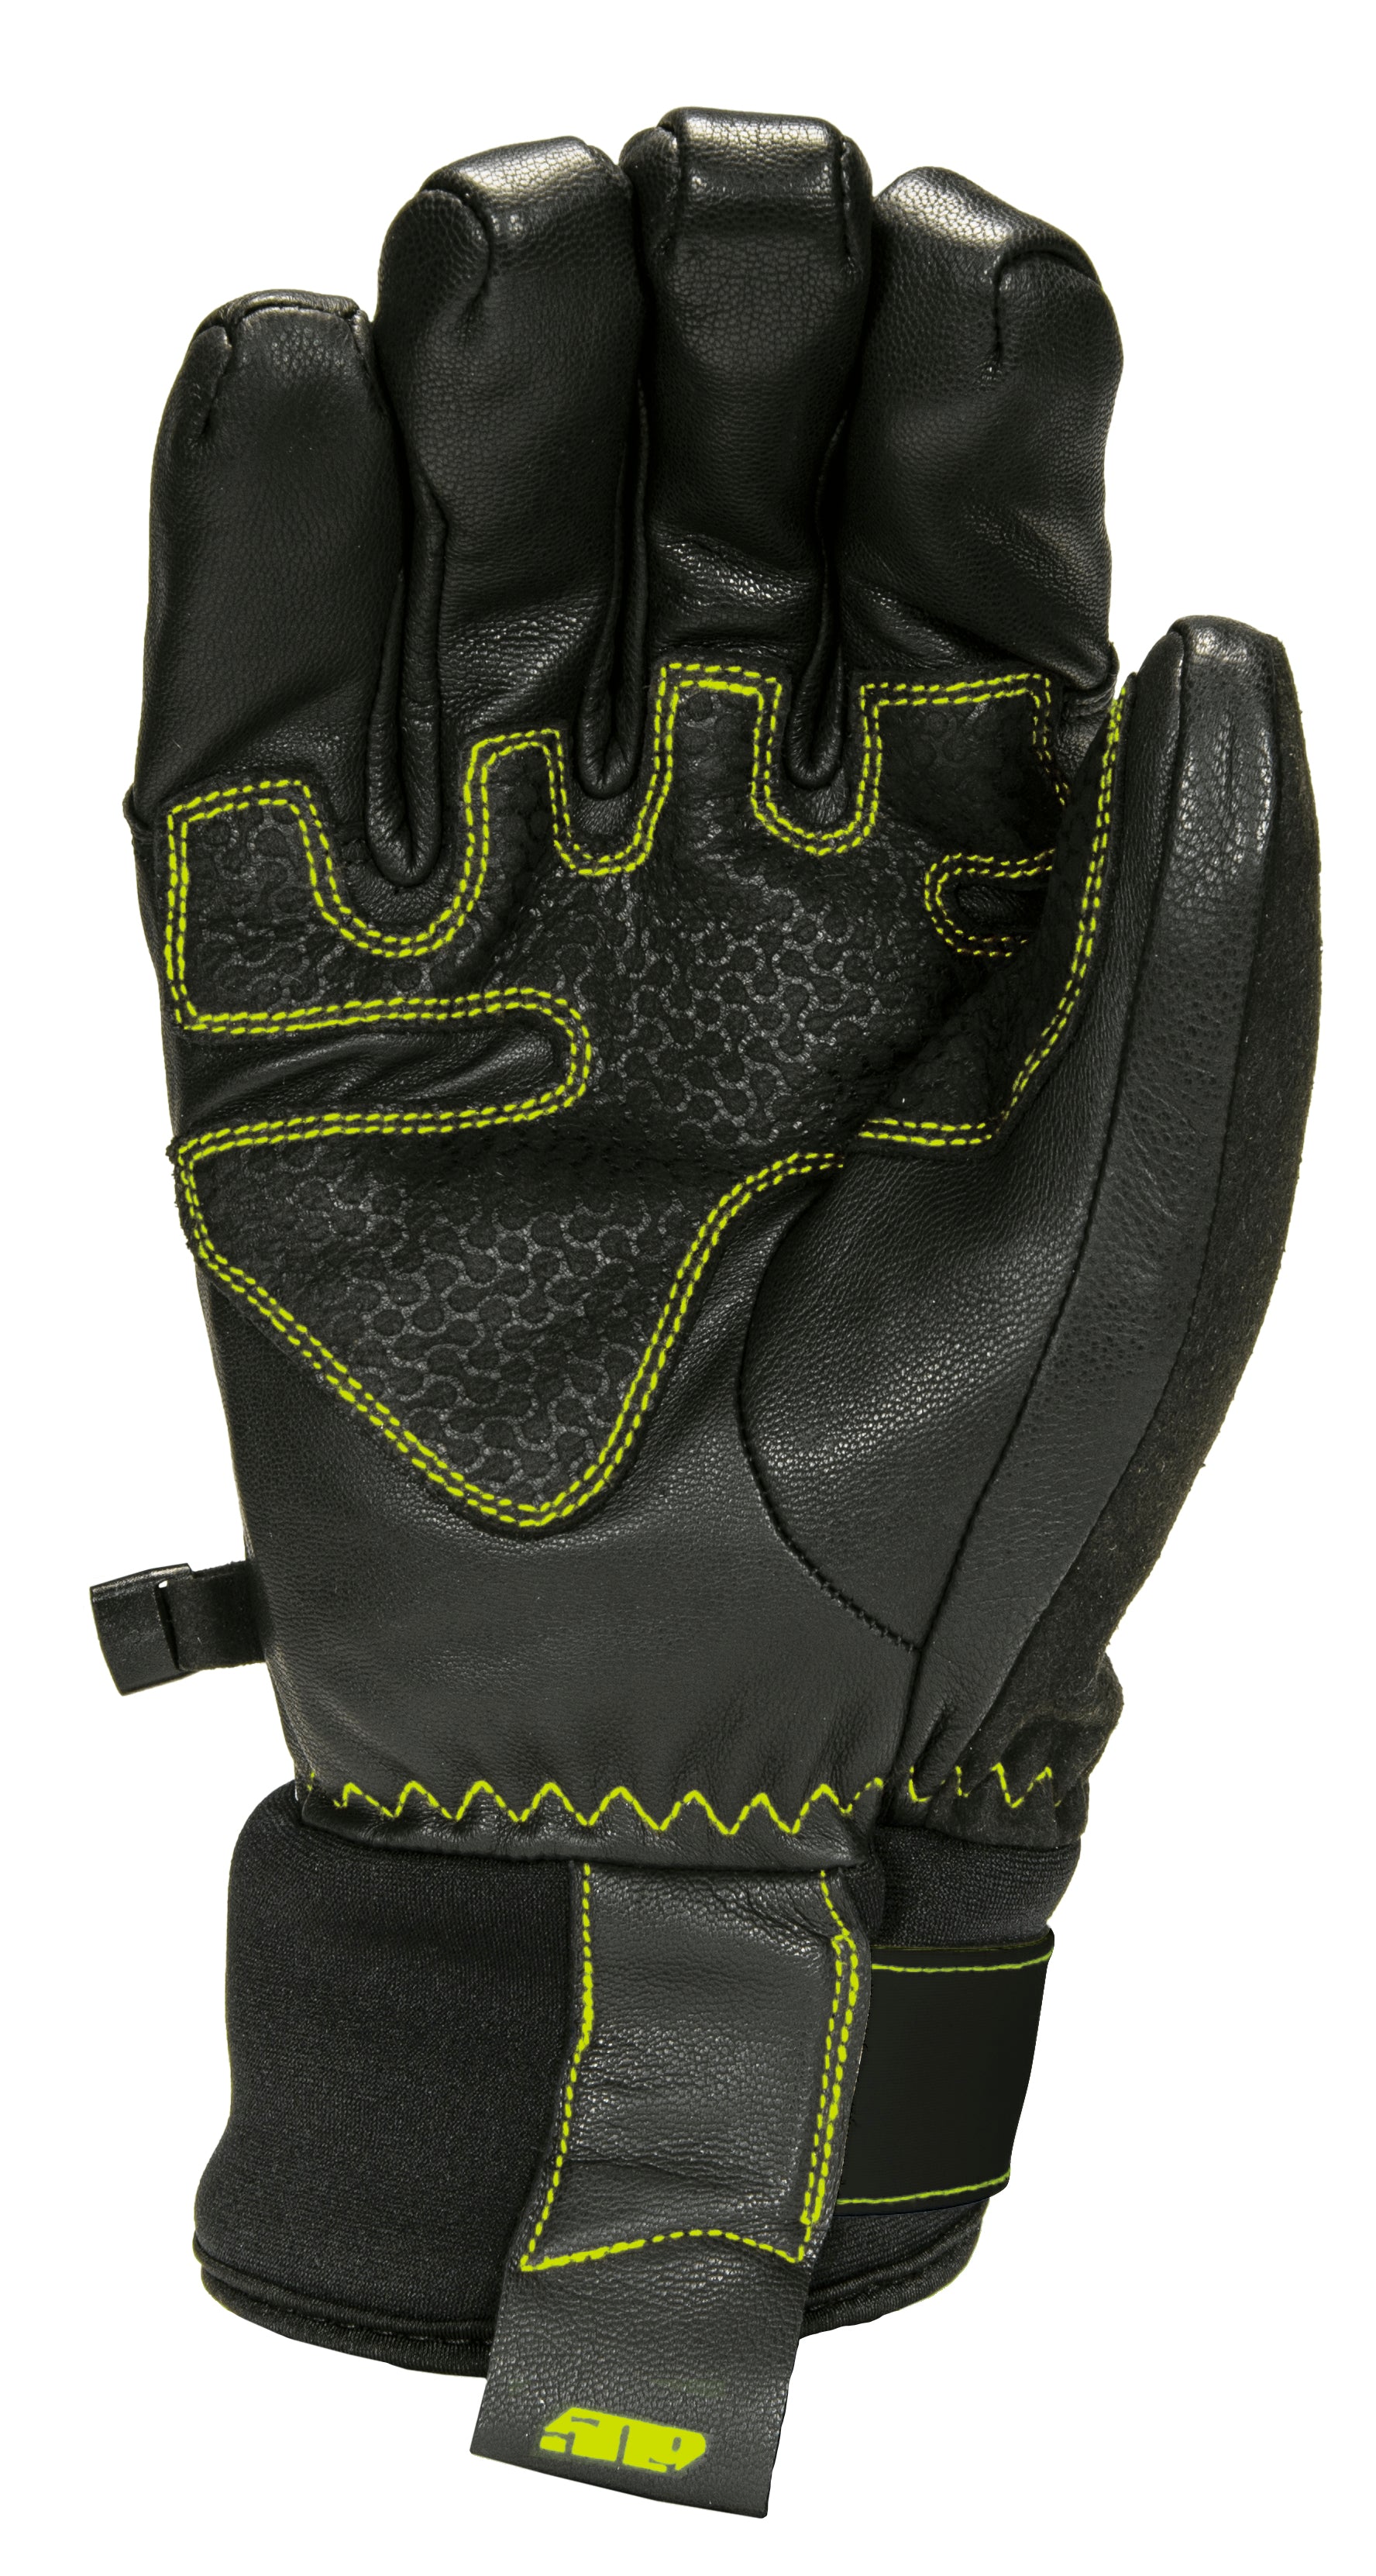 Free Range Glove W23 Black Friday Limited Edition